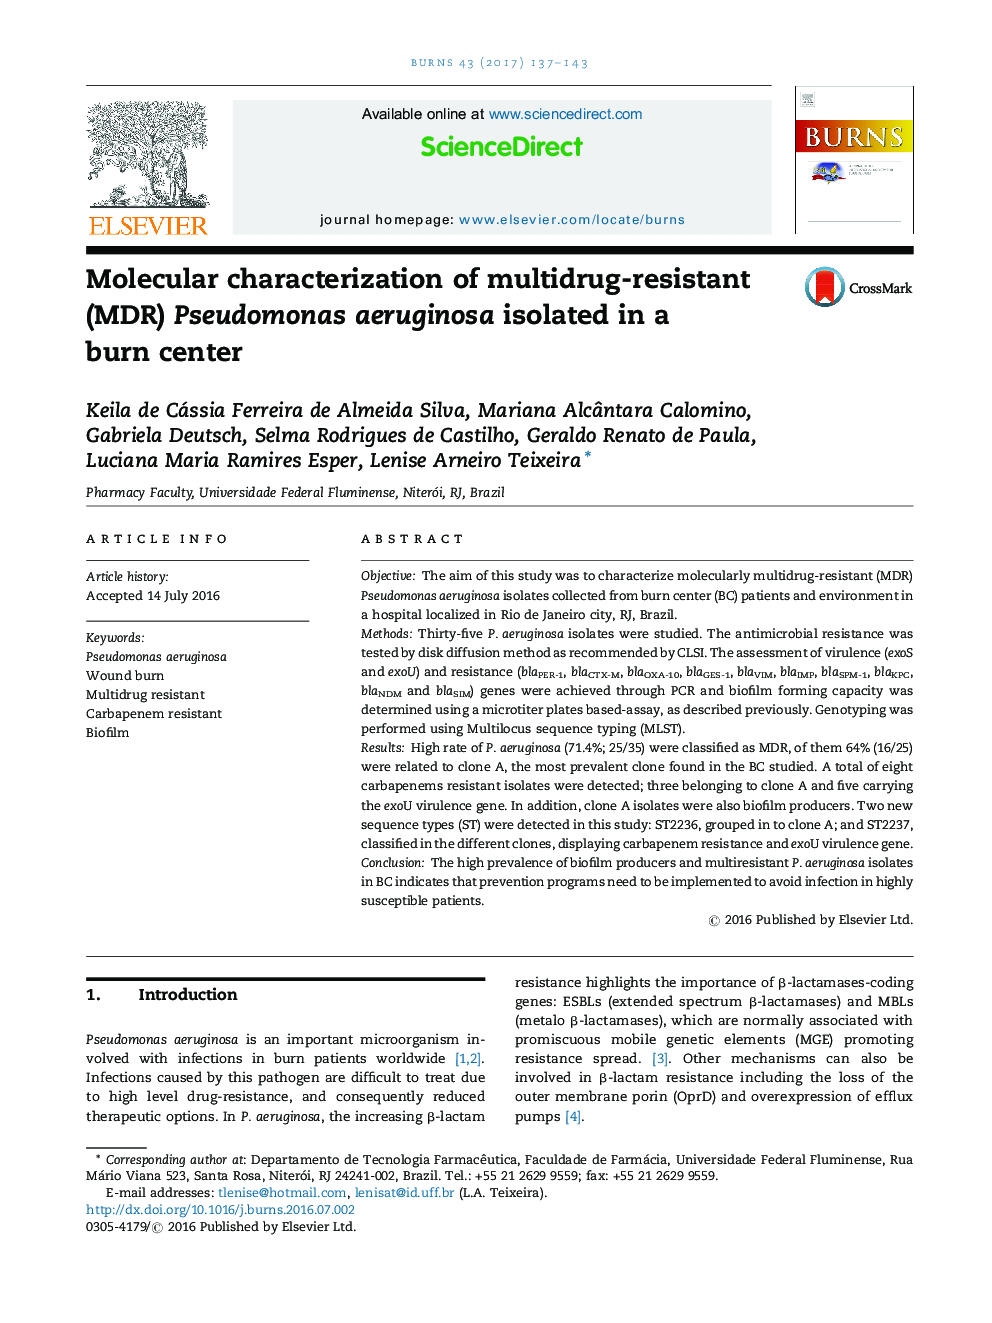 Molecular characterization of multidrug-resistant (MDR) Pseudomonas aeruginosa isolated in a burn center